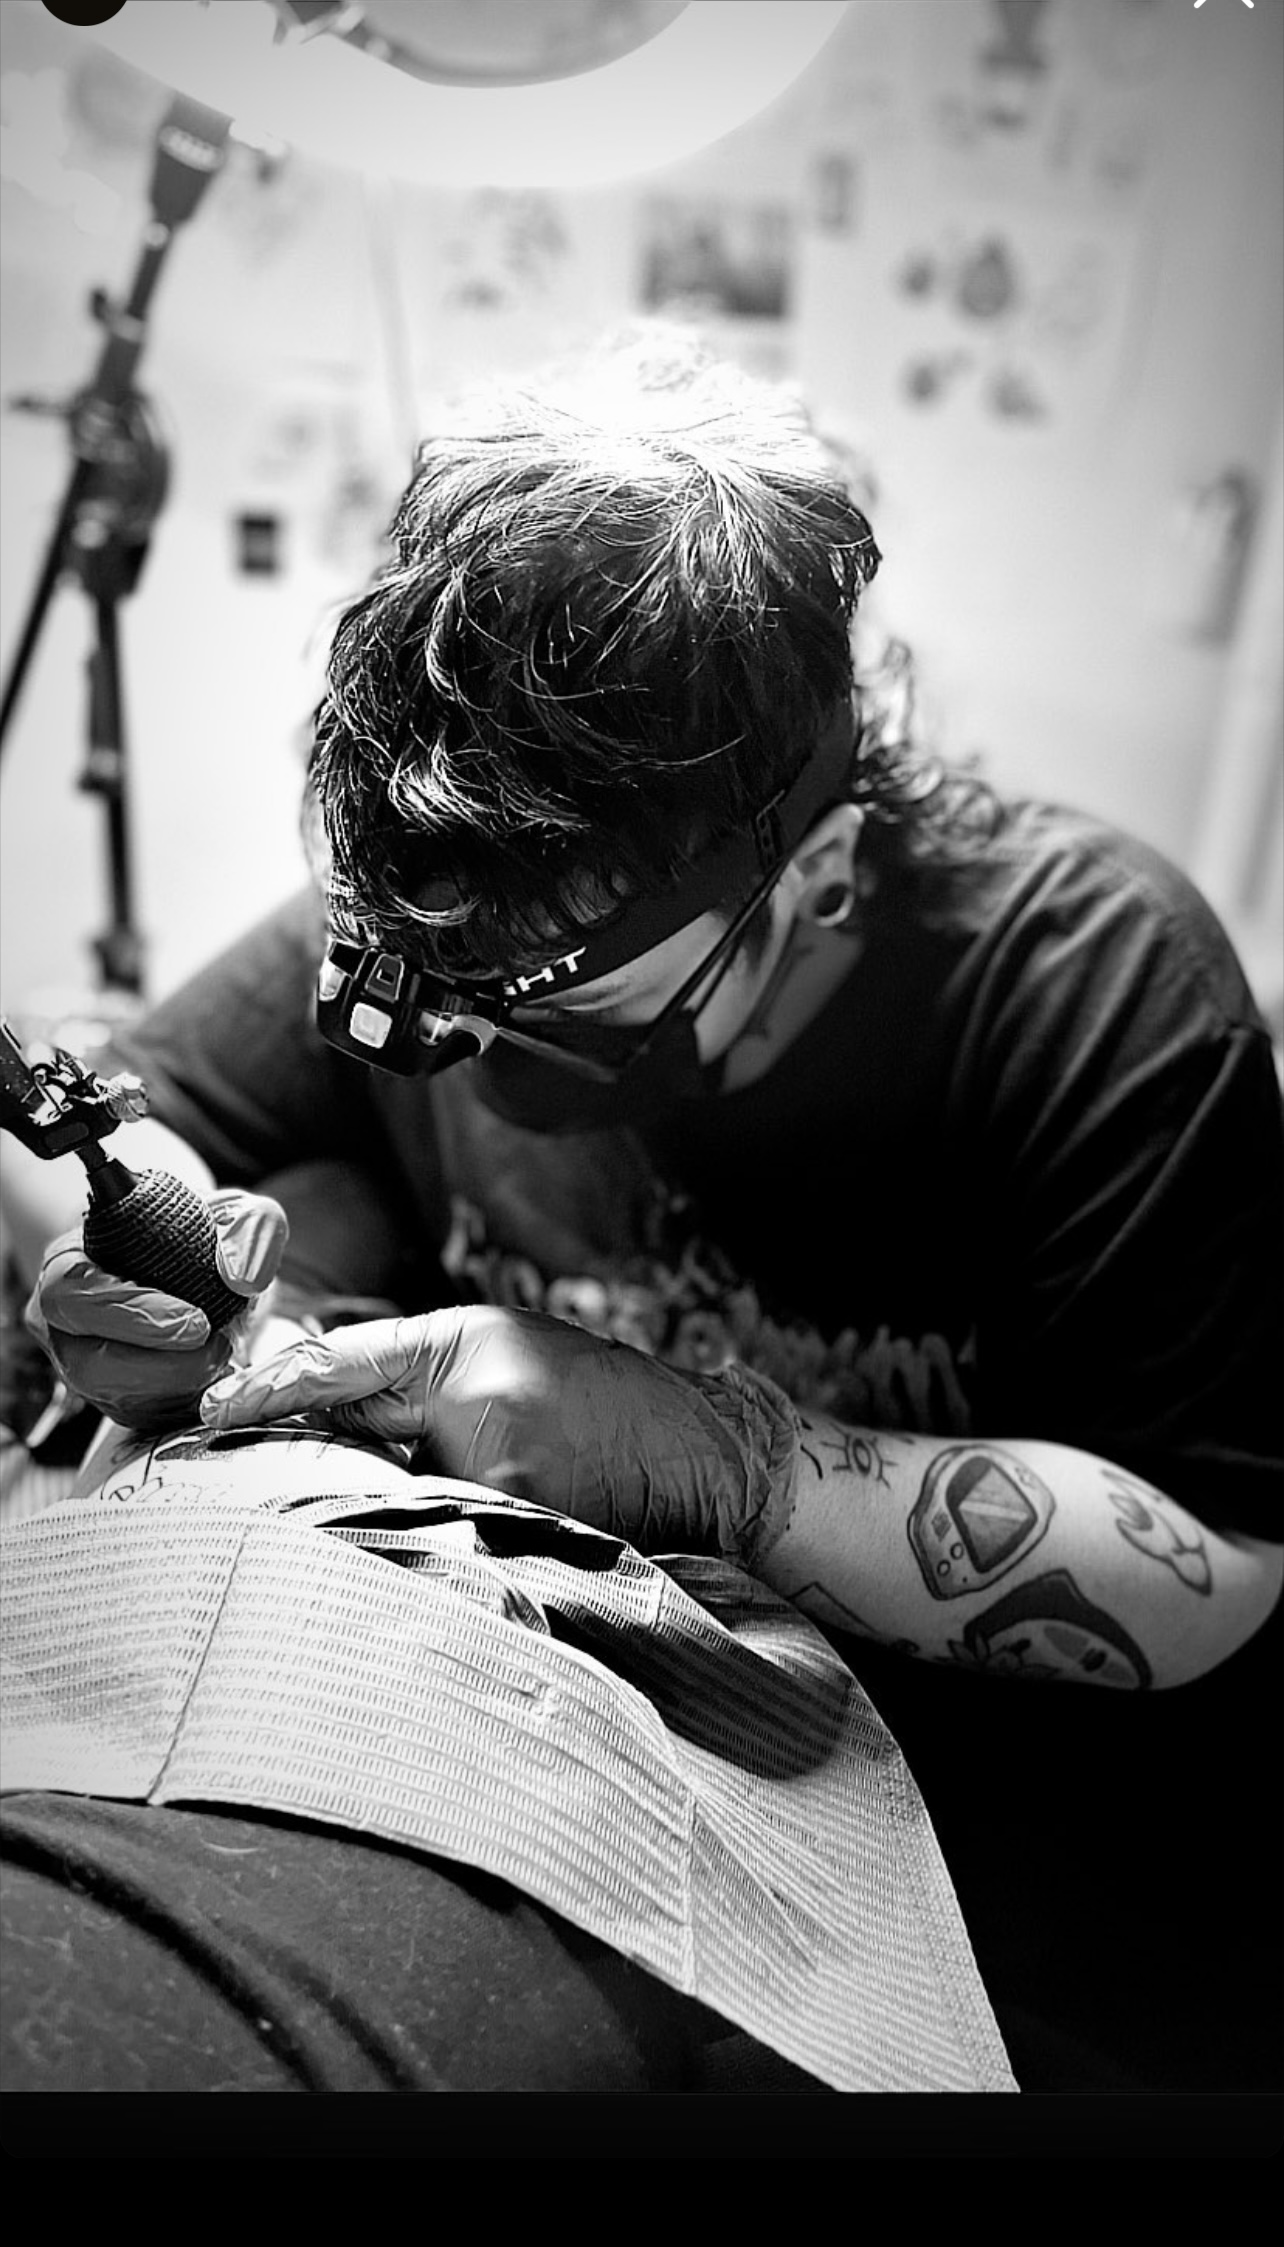 Annie @prawn.girl started... - Canberra Ink Tattoo Studio | Facebook